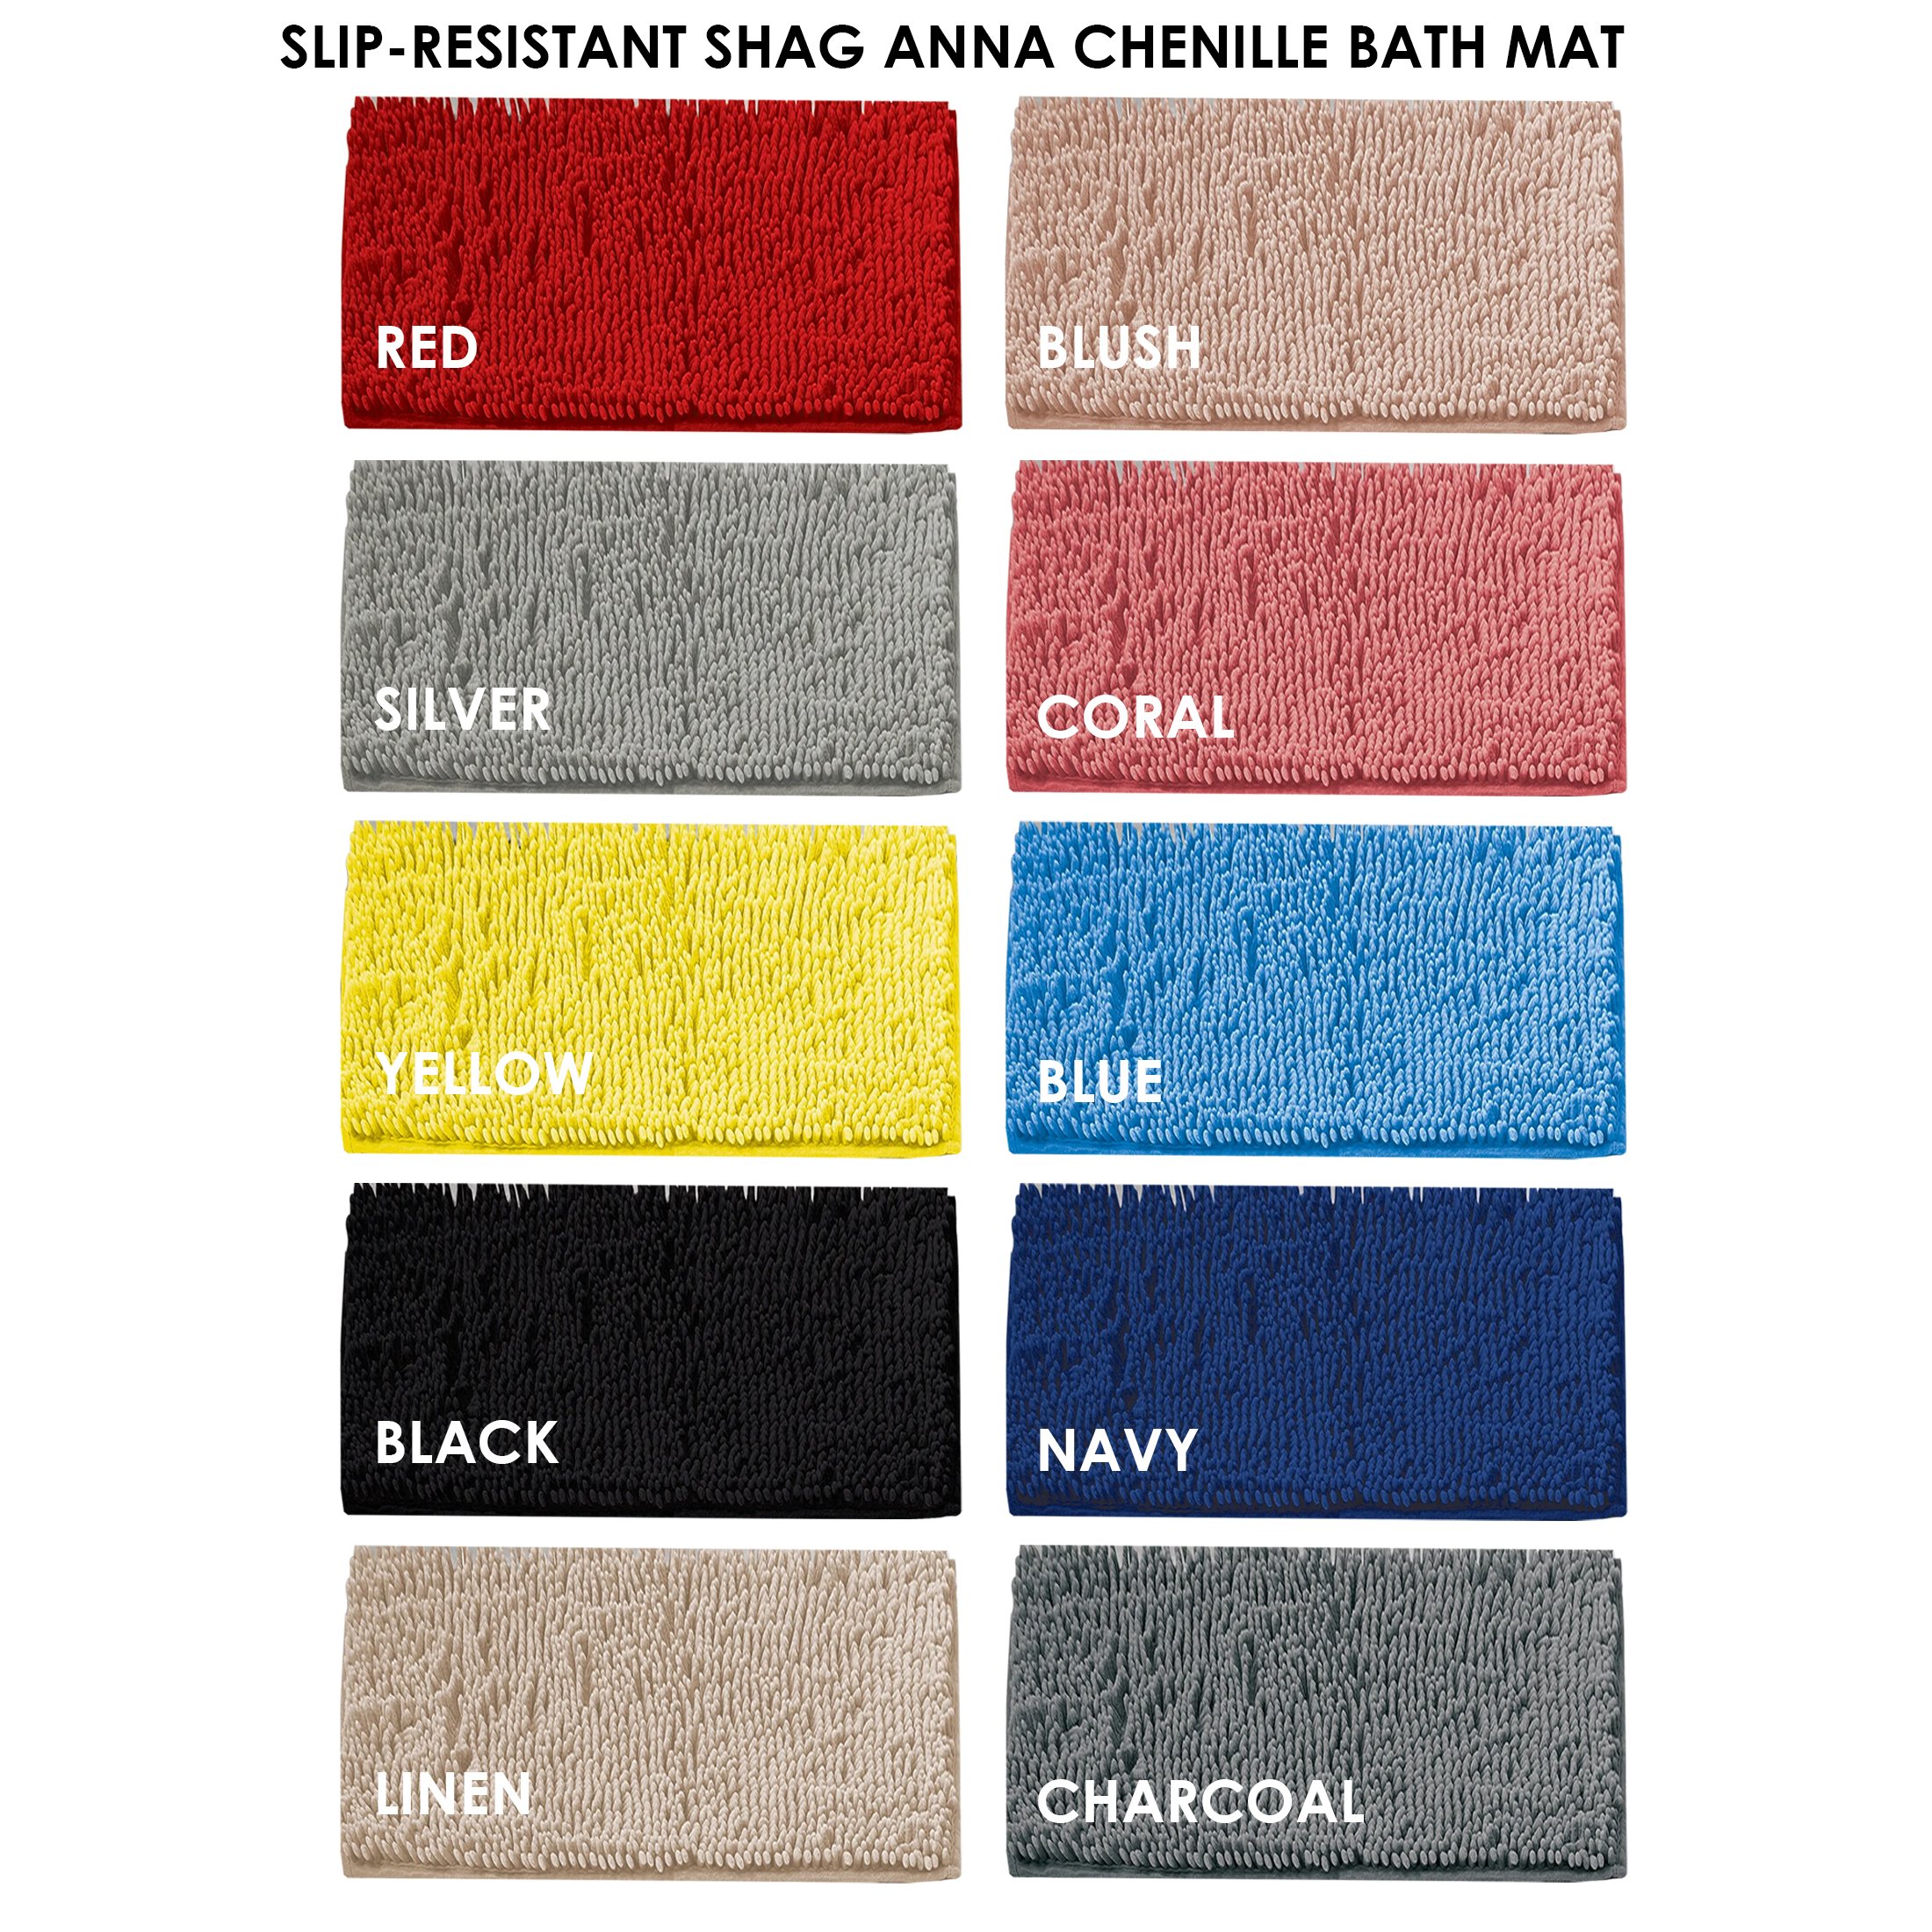 Slip-Resistant Shag Anna Chenille Soft Absorbent Bath Mat Bathroom Rug 17 X 24 - Silver